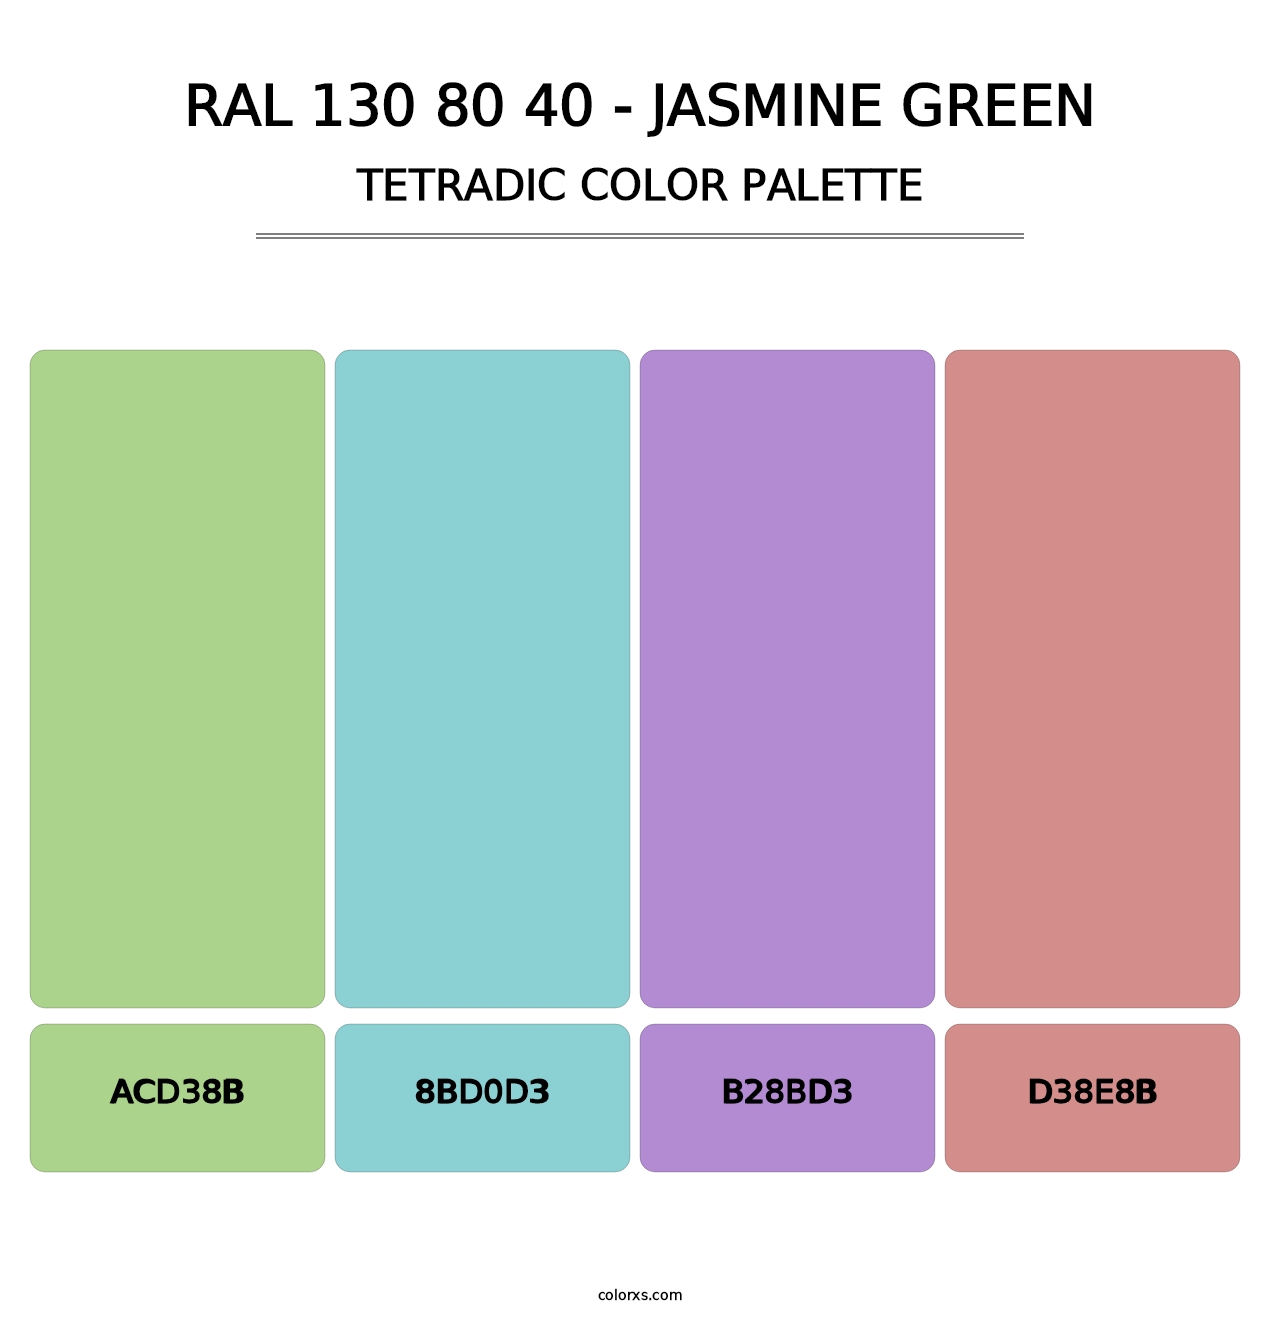 RAL 130 80 40 - Jasmine Green - Tetradic Color Palette